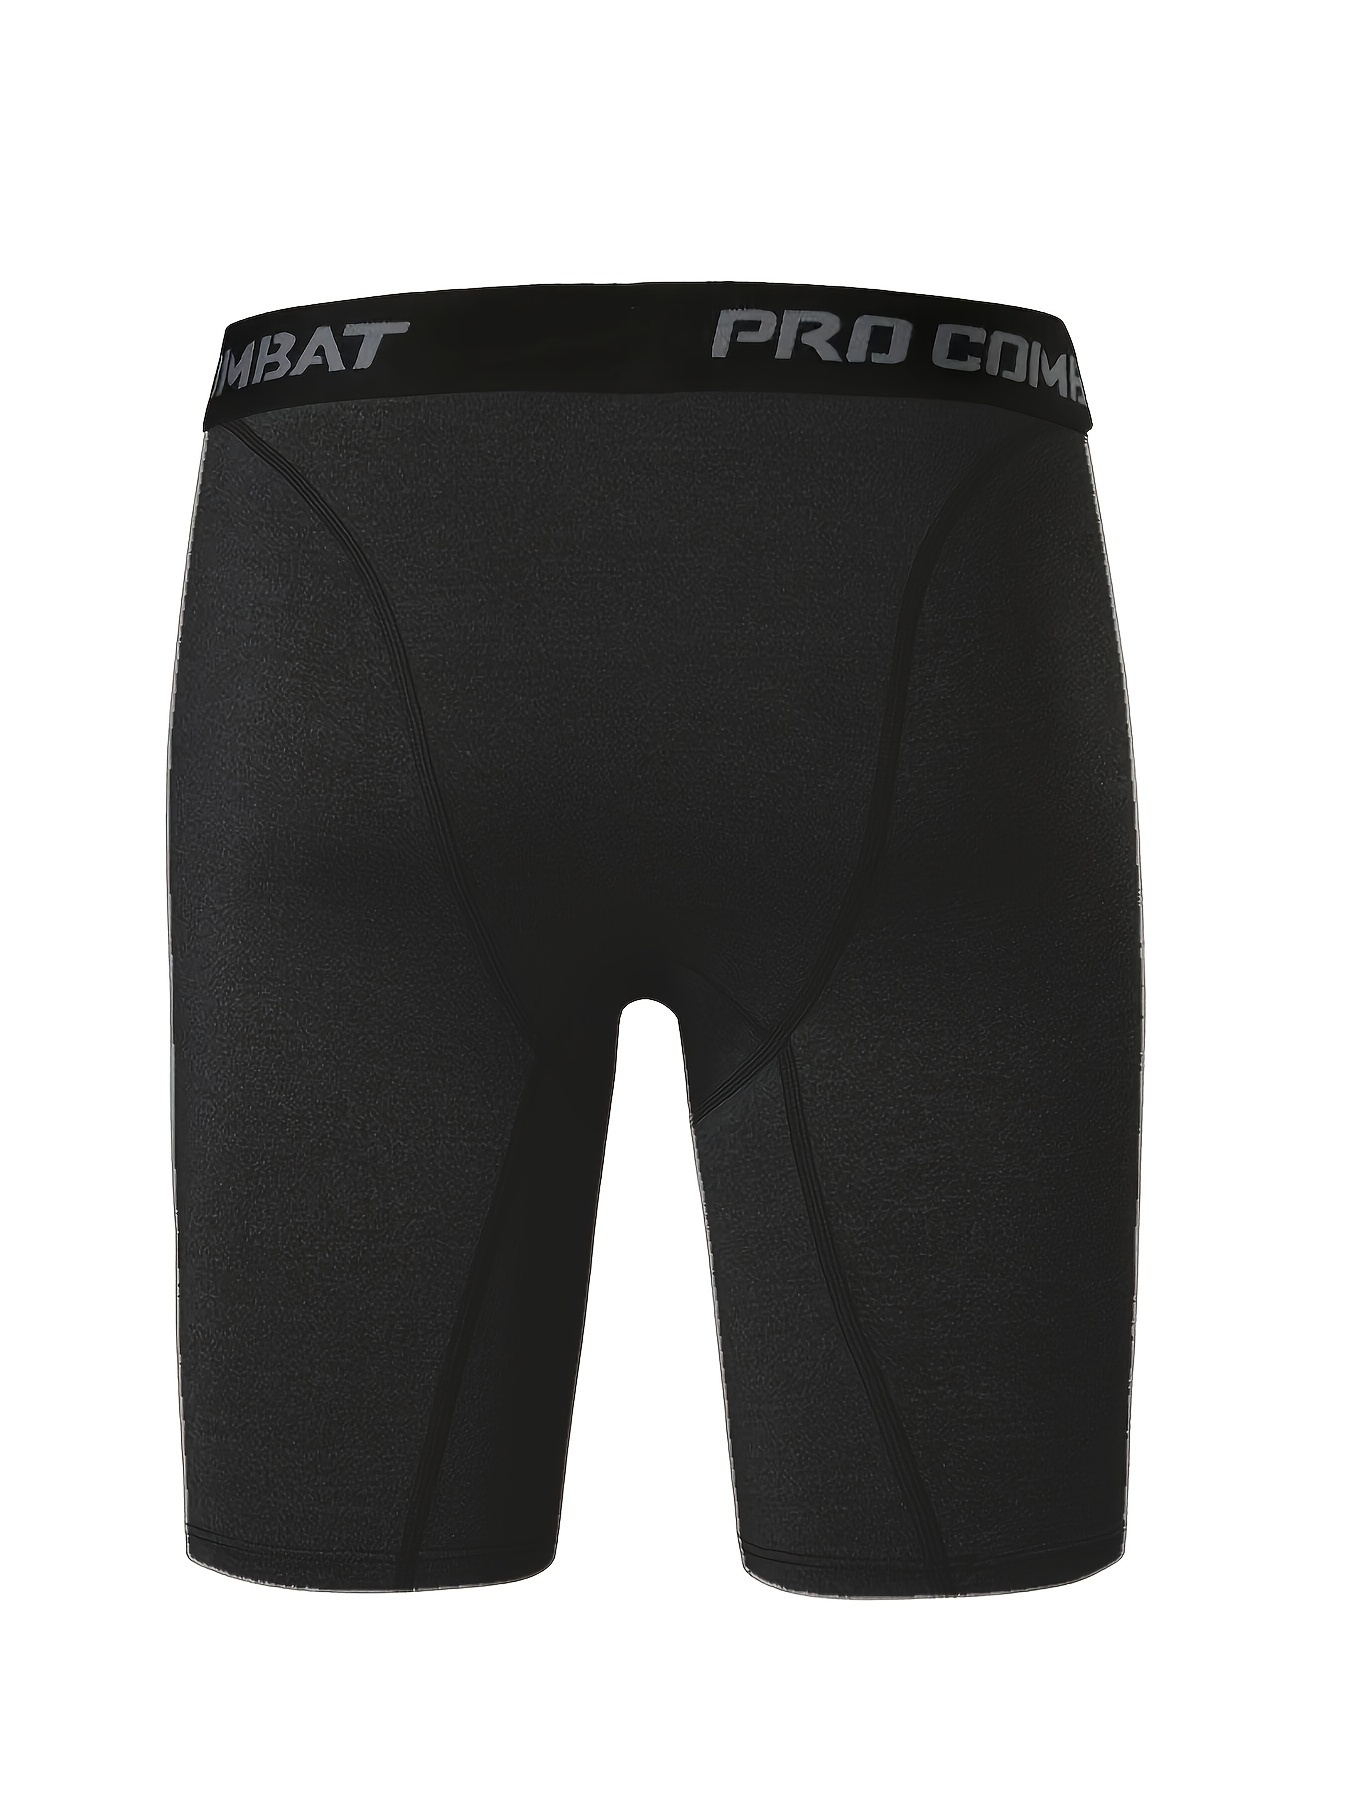 nike pro combat men's 6 compression shorts underwear black size 2xl 